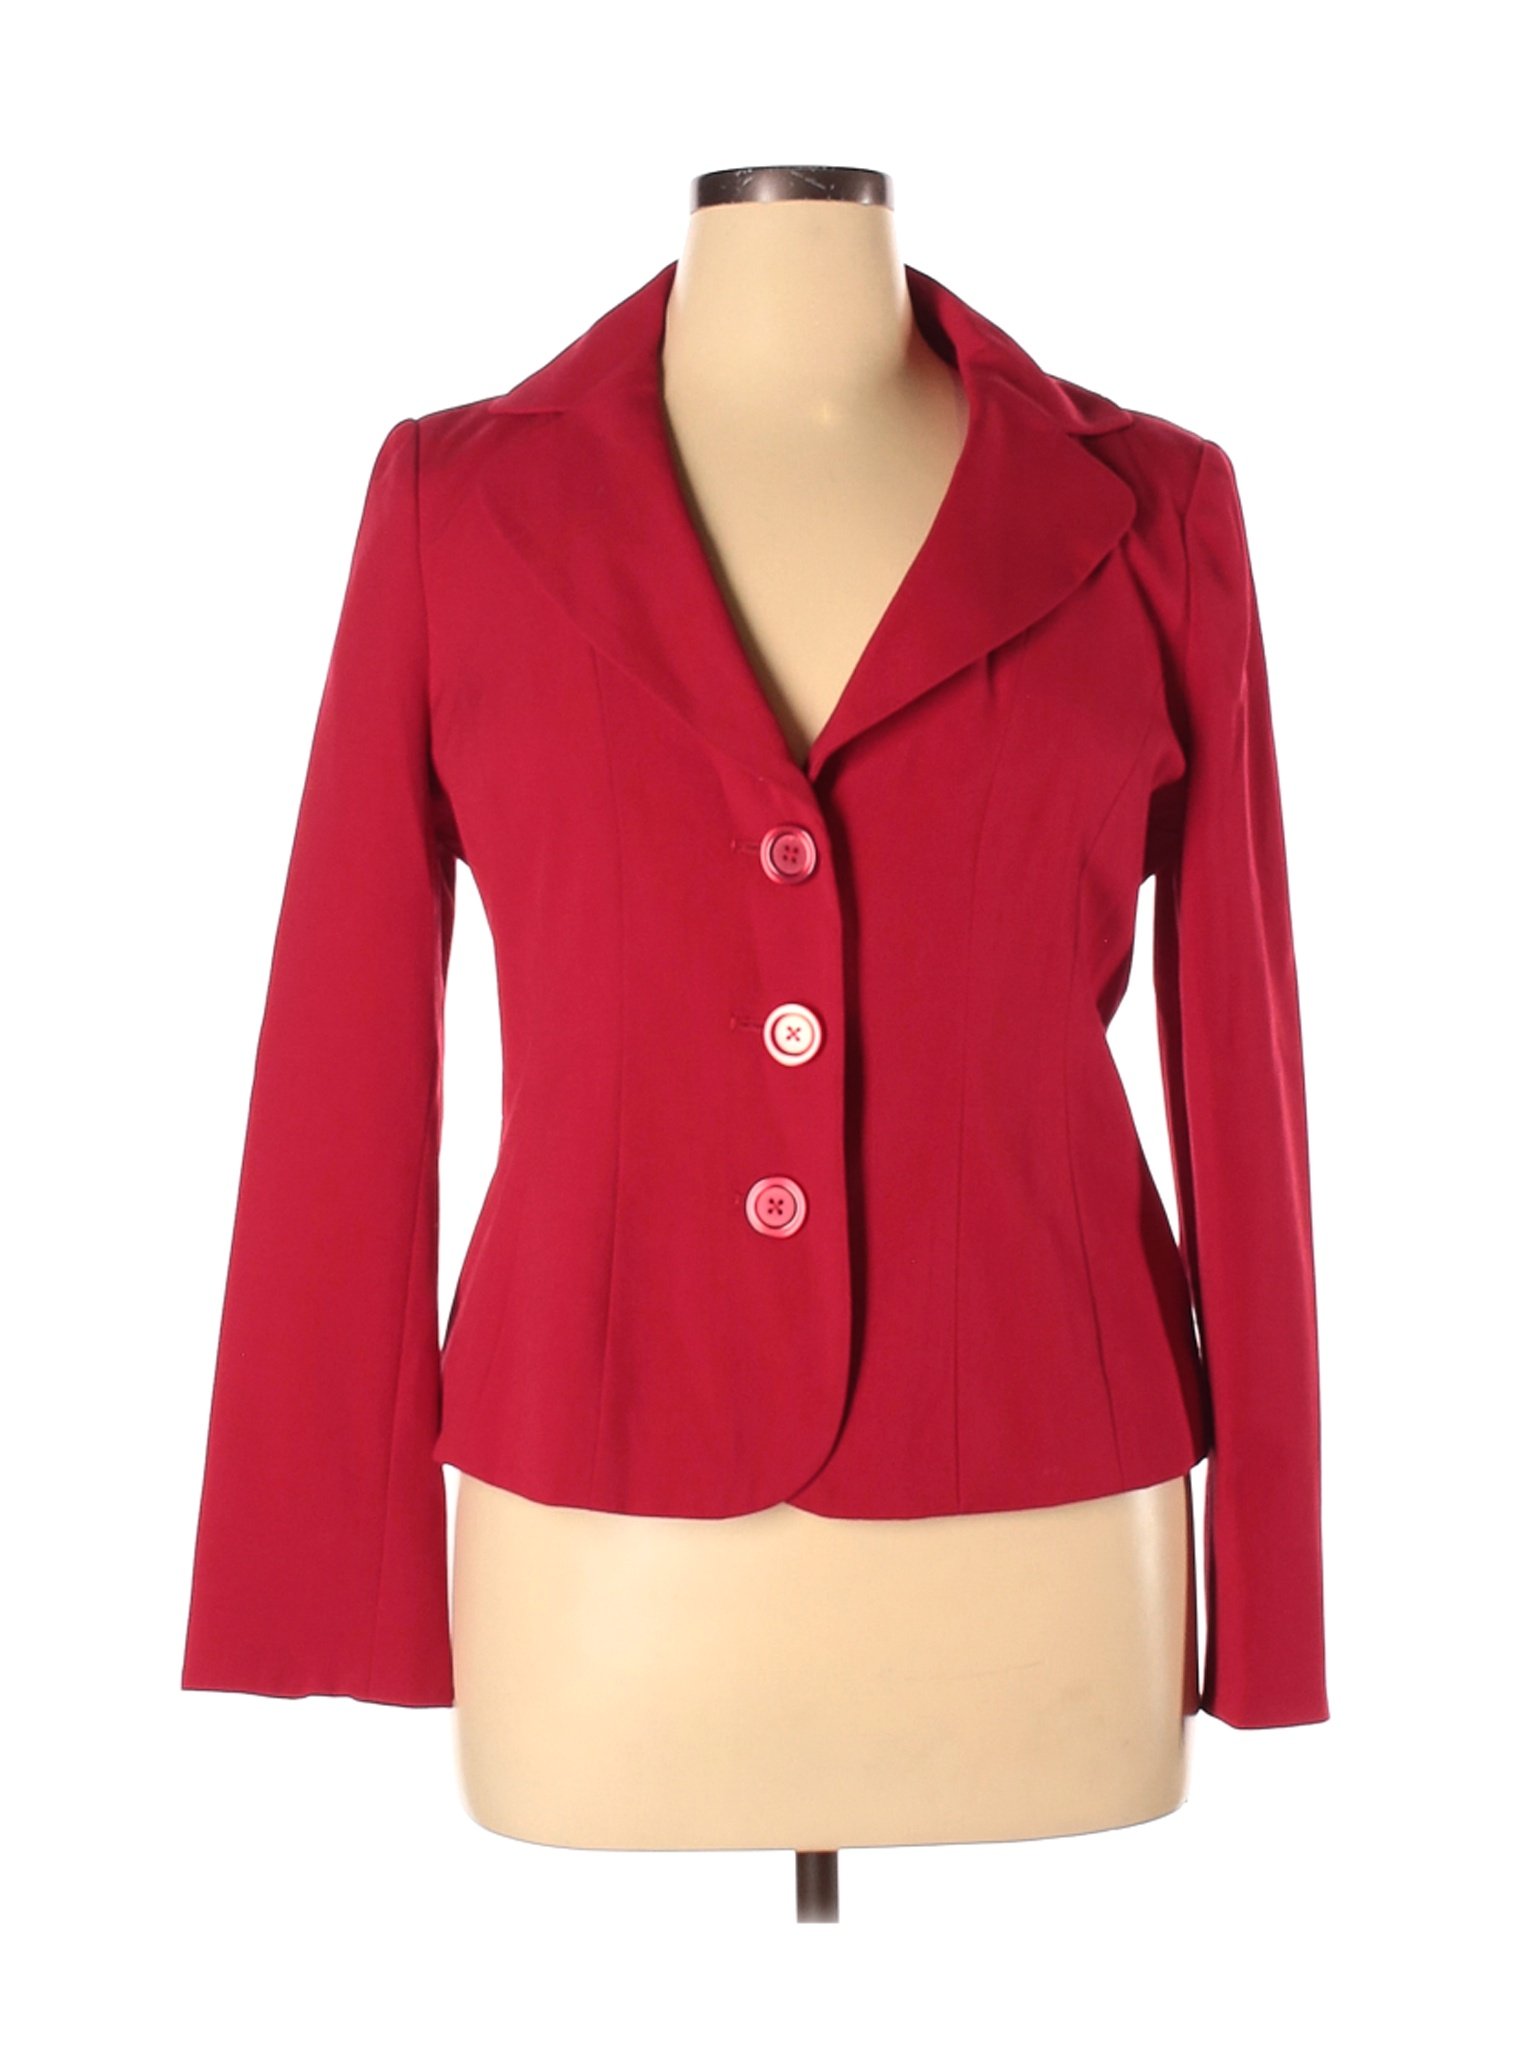 Cato Women Red Blazer 14 | eBay